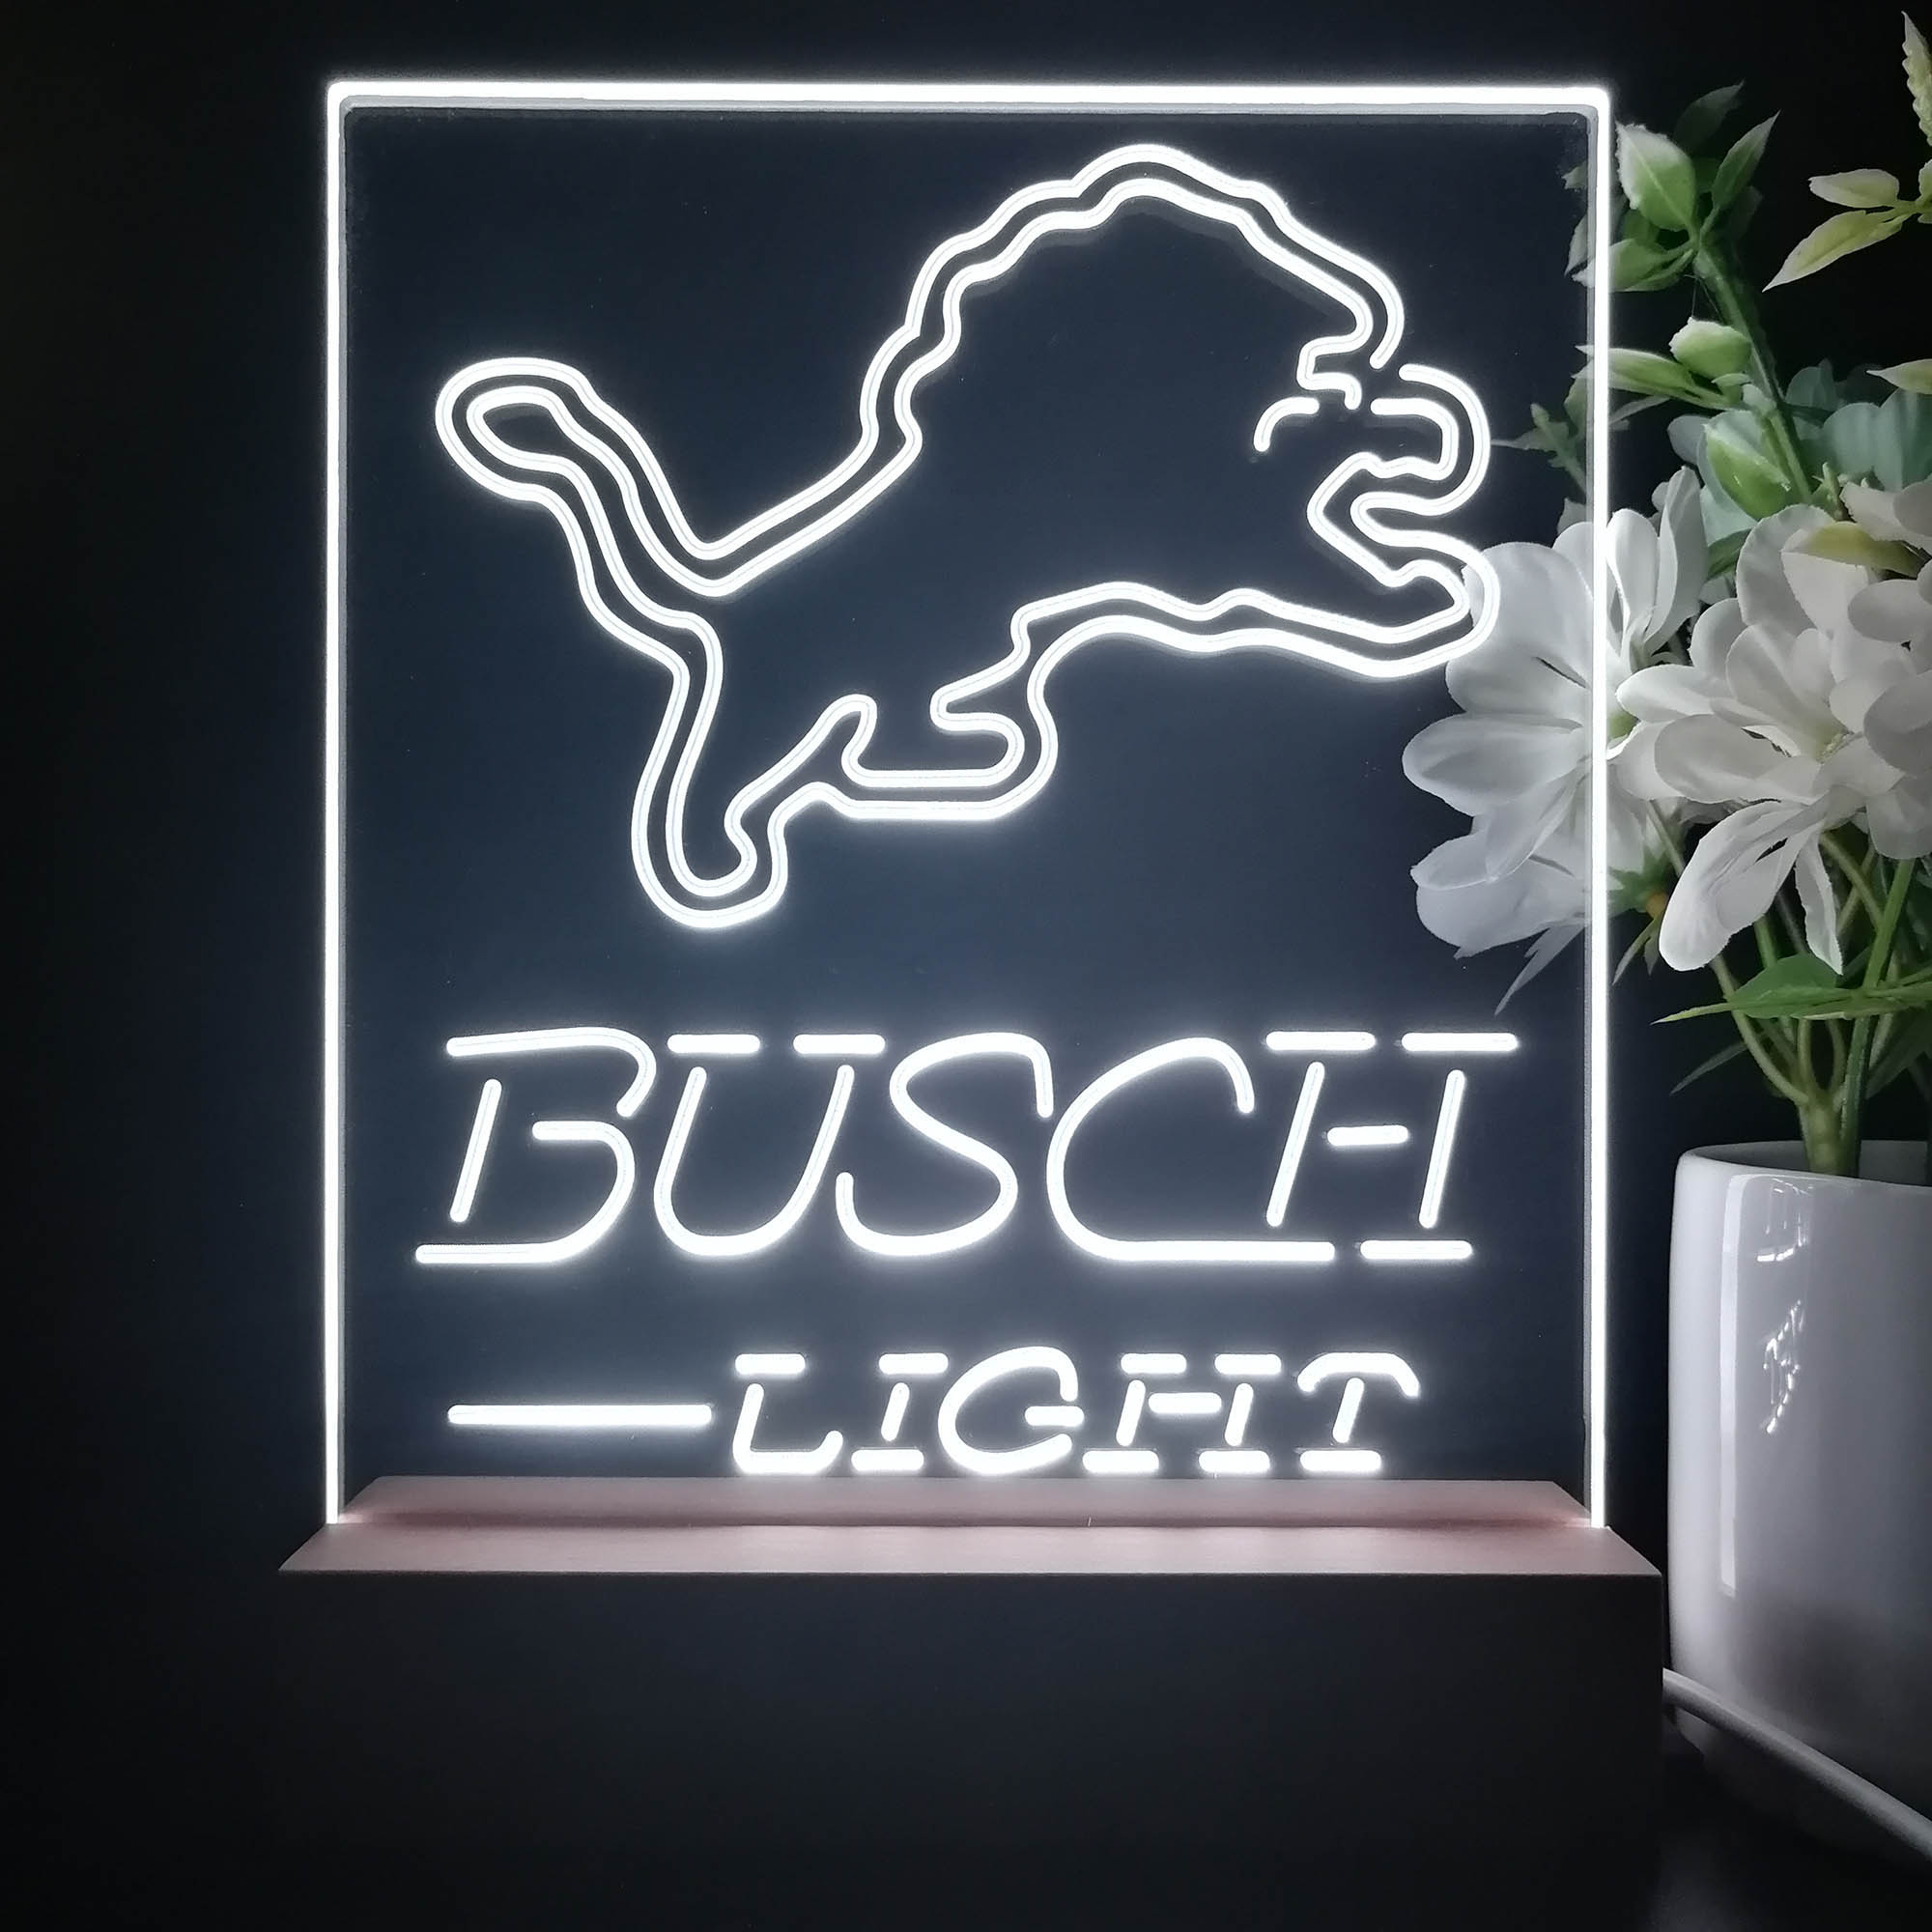 Detroit Lion Busch Light Neon Sign Pub Bar Lamp